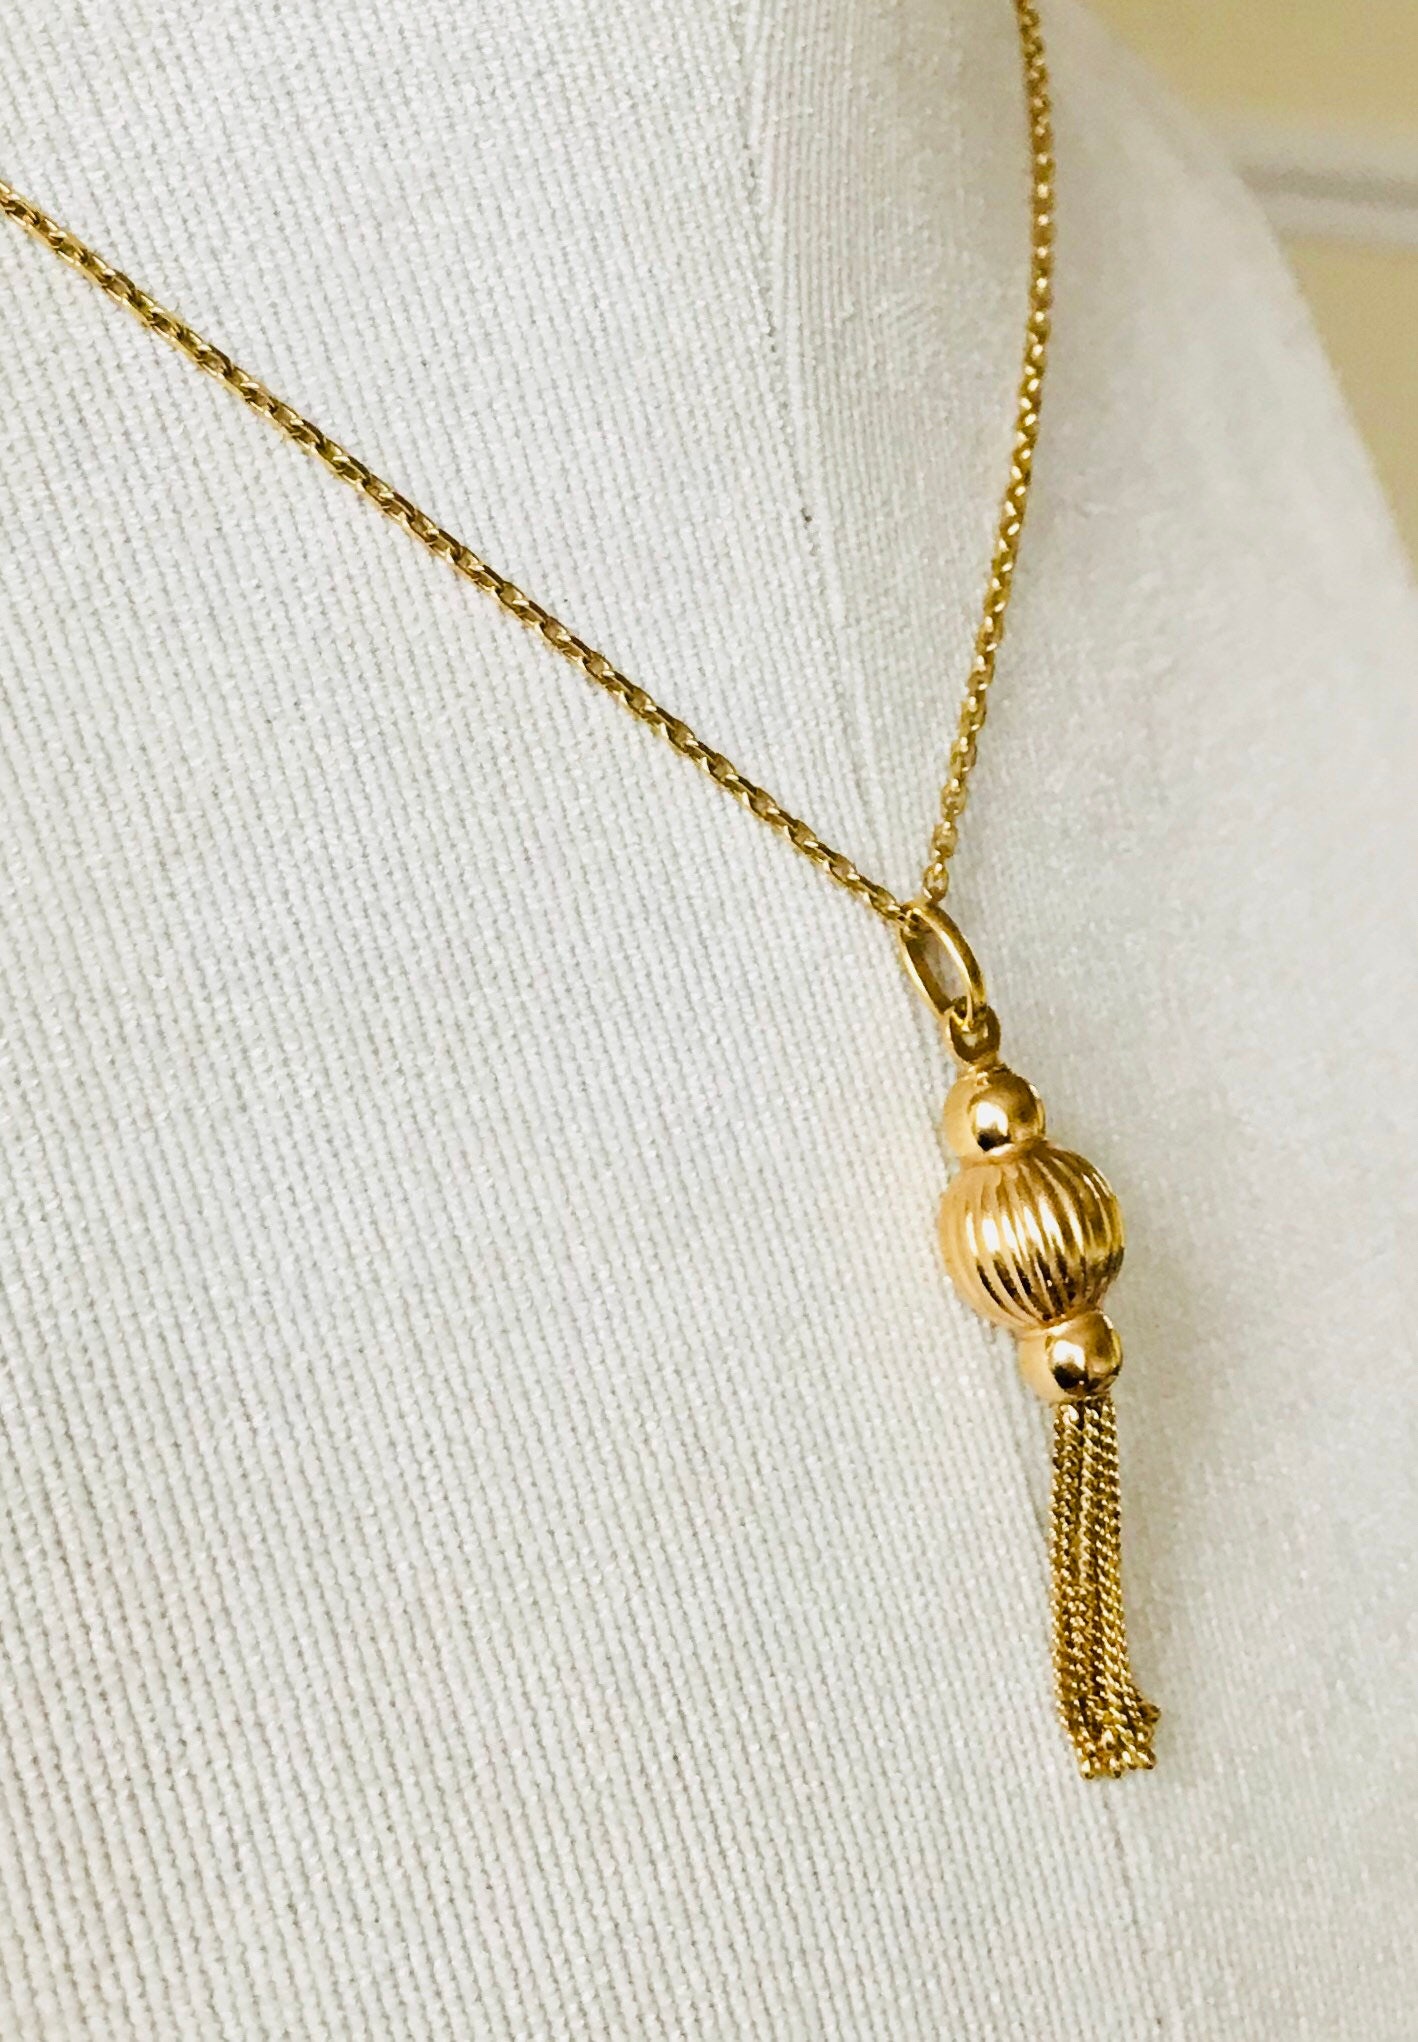 Stunning vintage 9ct gold Tassel necklace - fully hallmarked